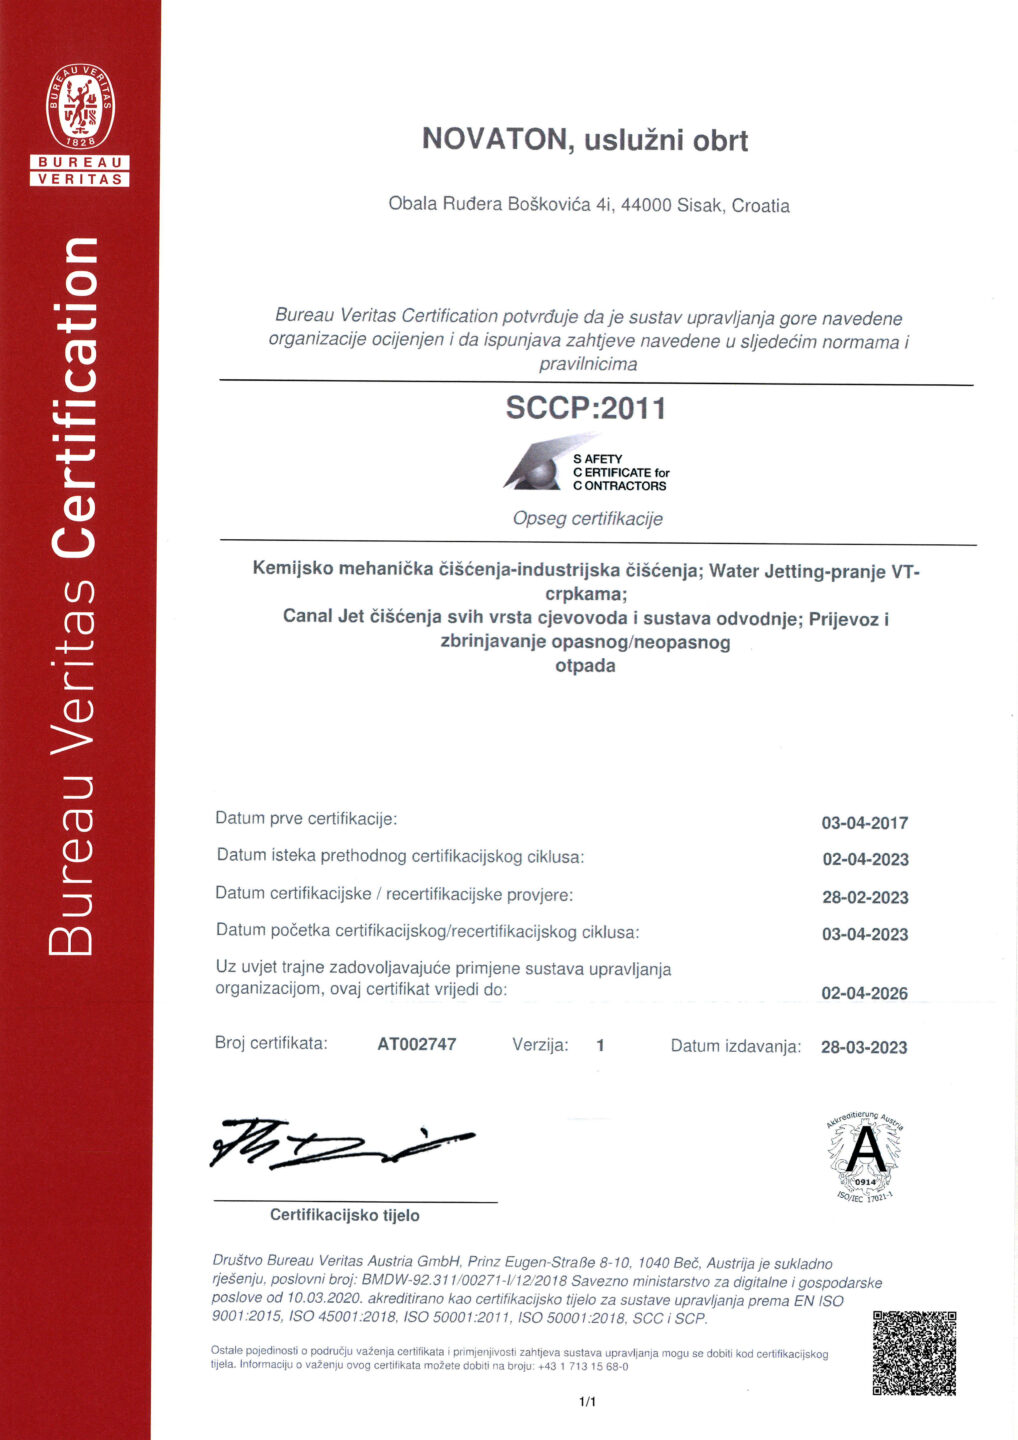 Certificate-AT002747_Novaton_23-26-cro_rev01